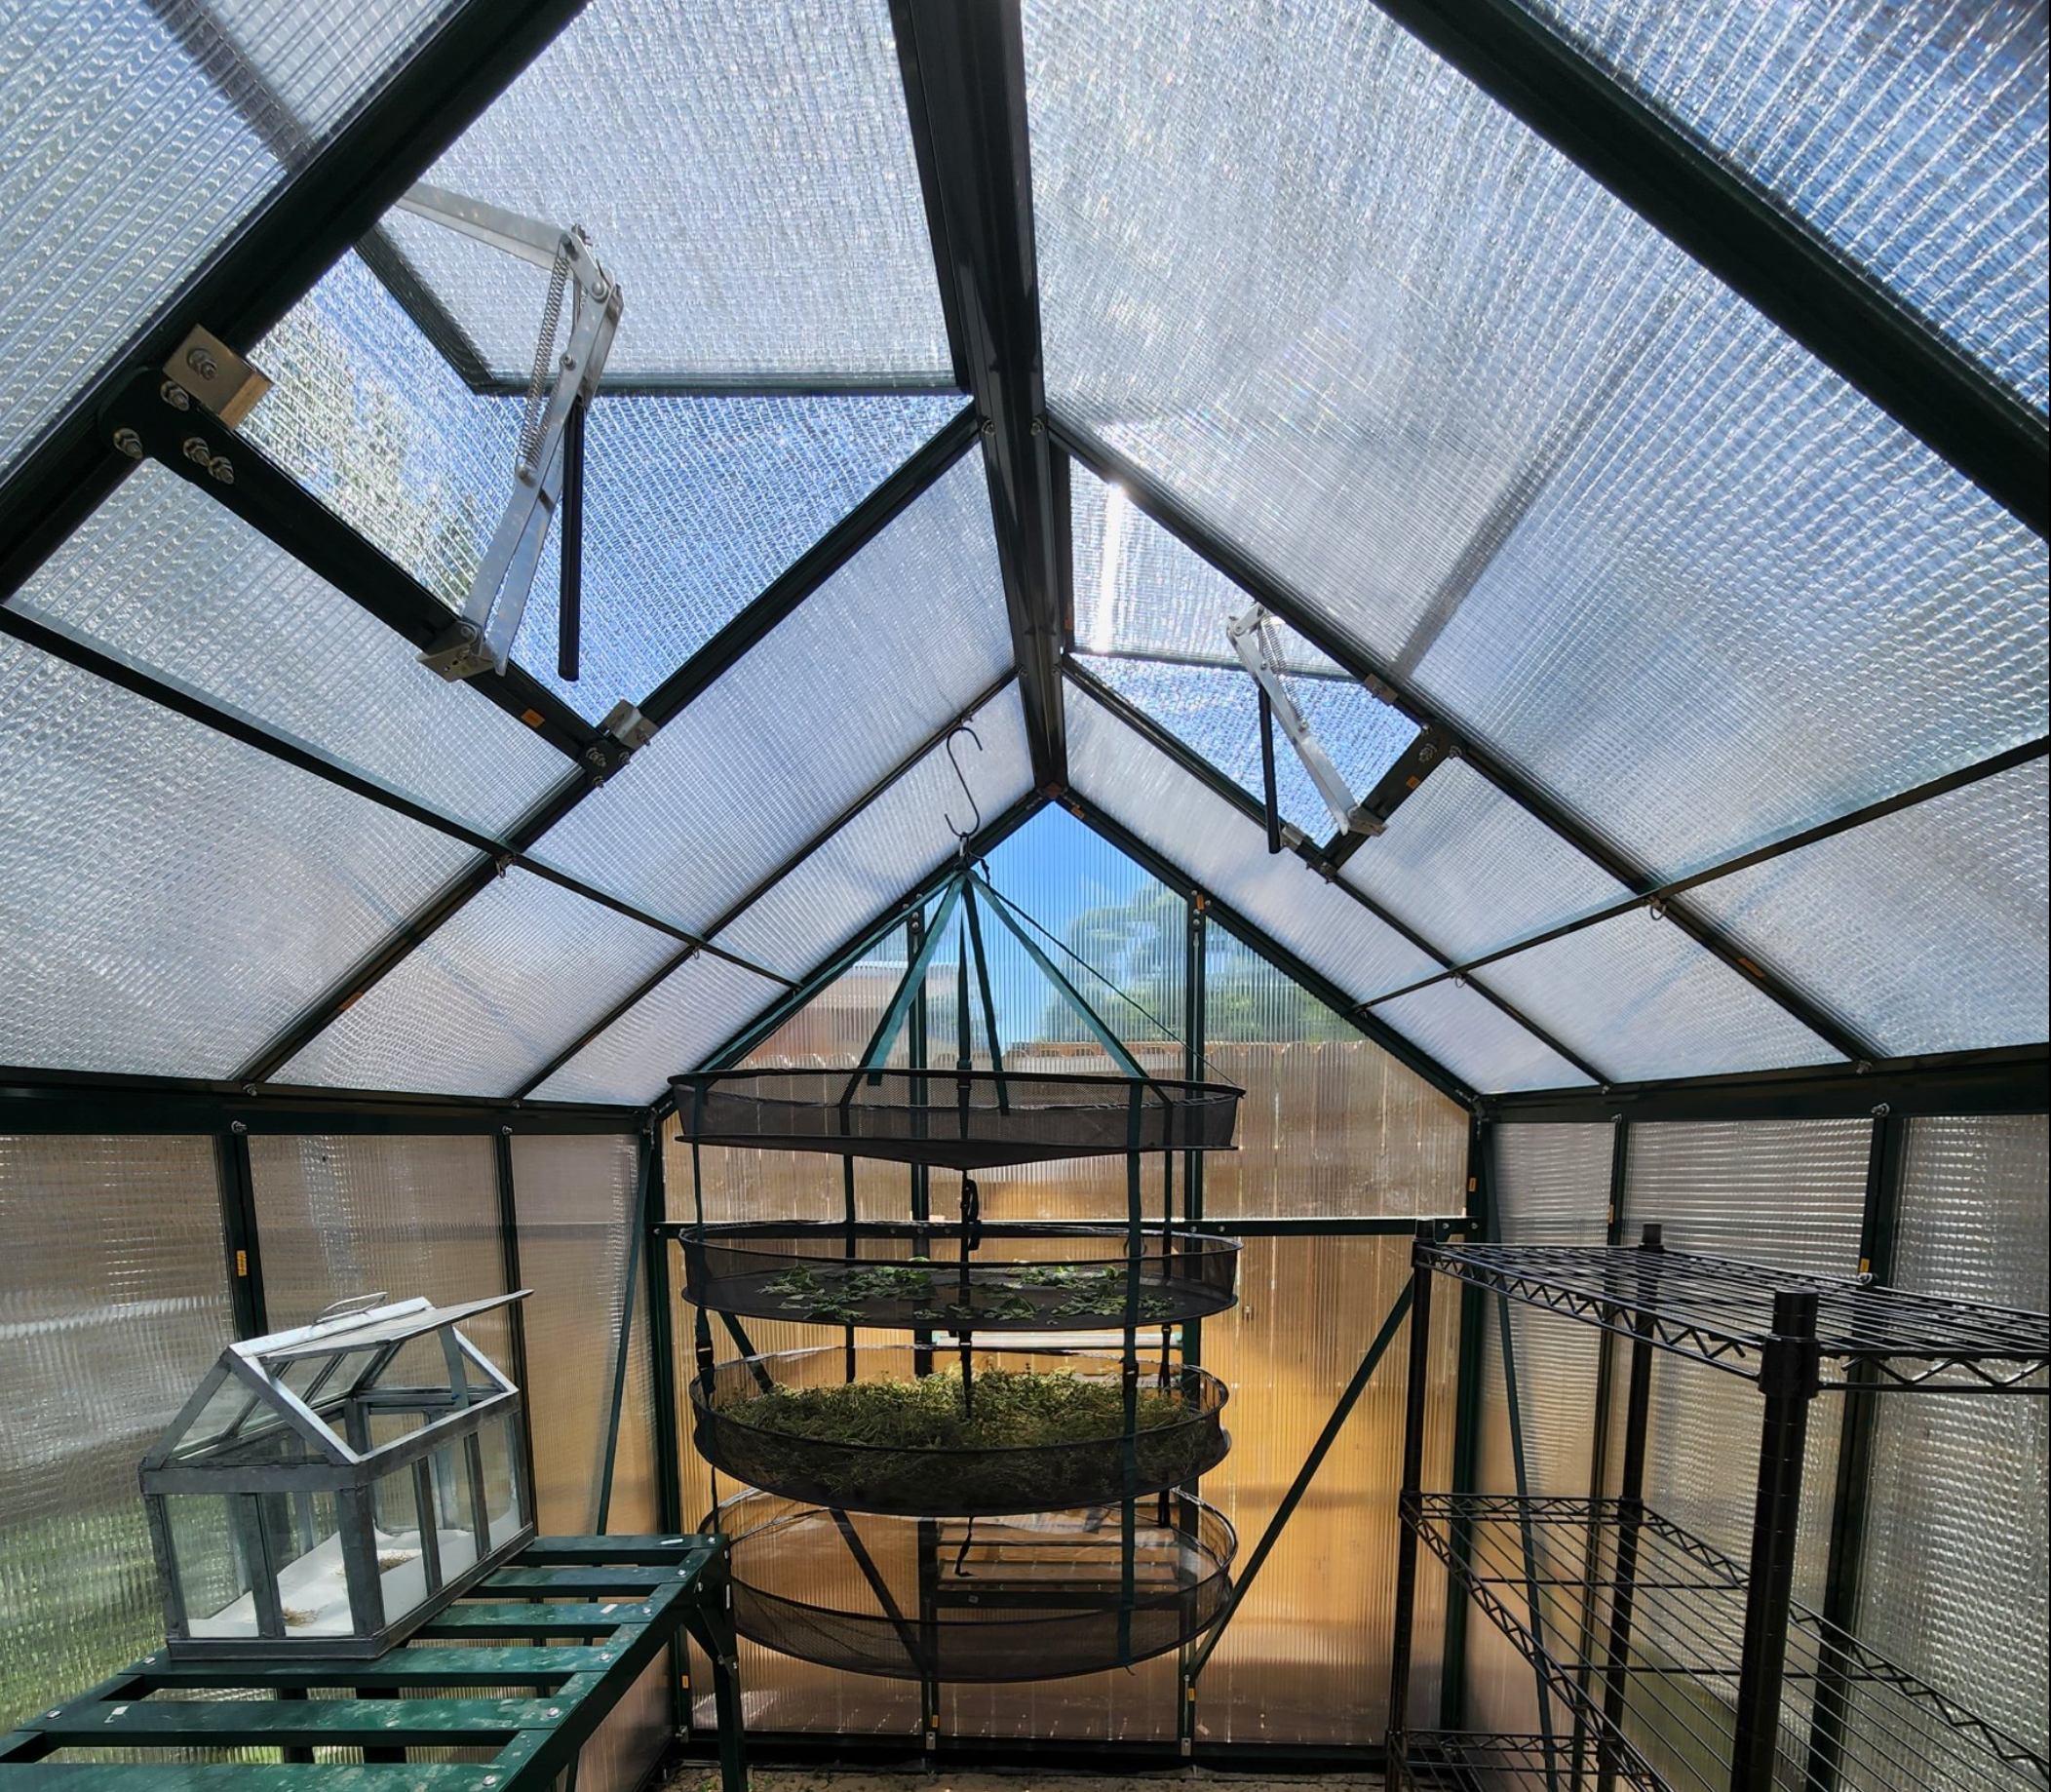 Grandio Greenhouse Extension Kit